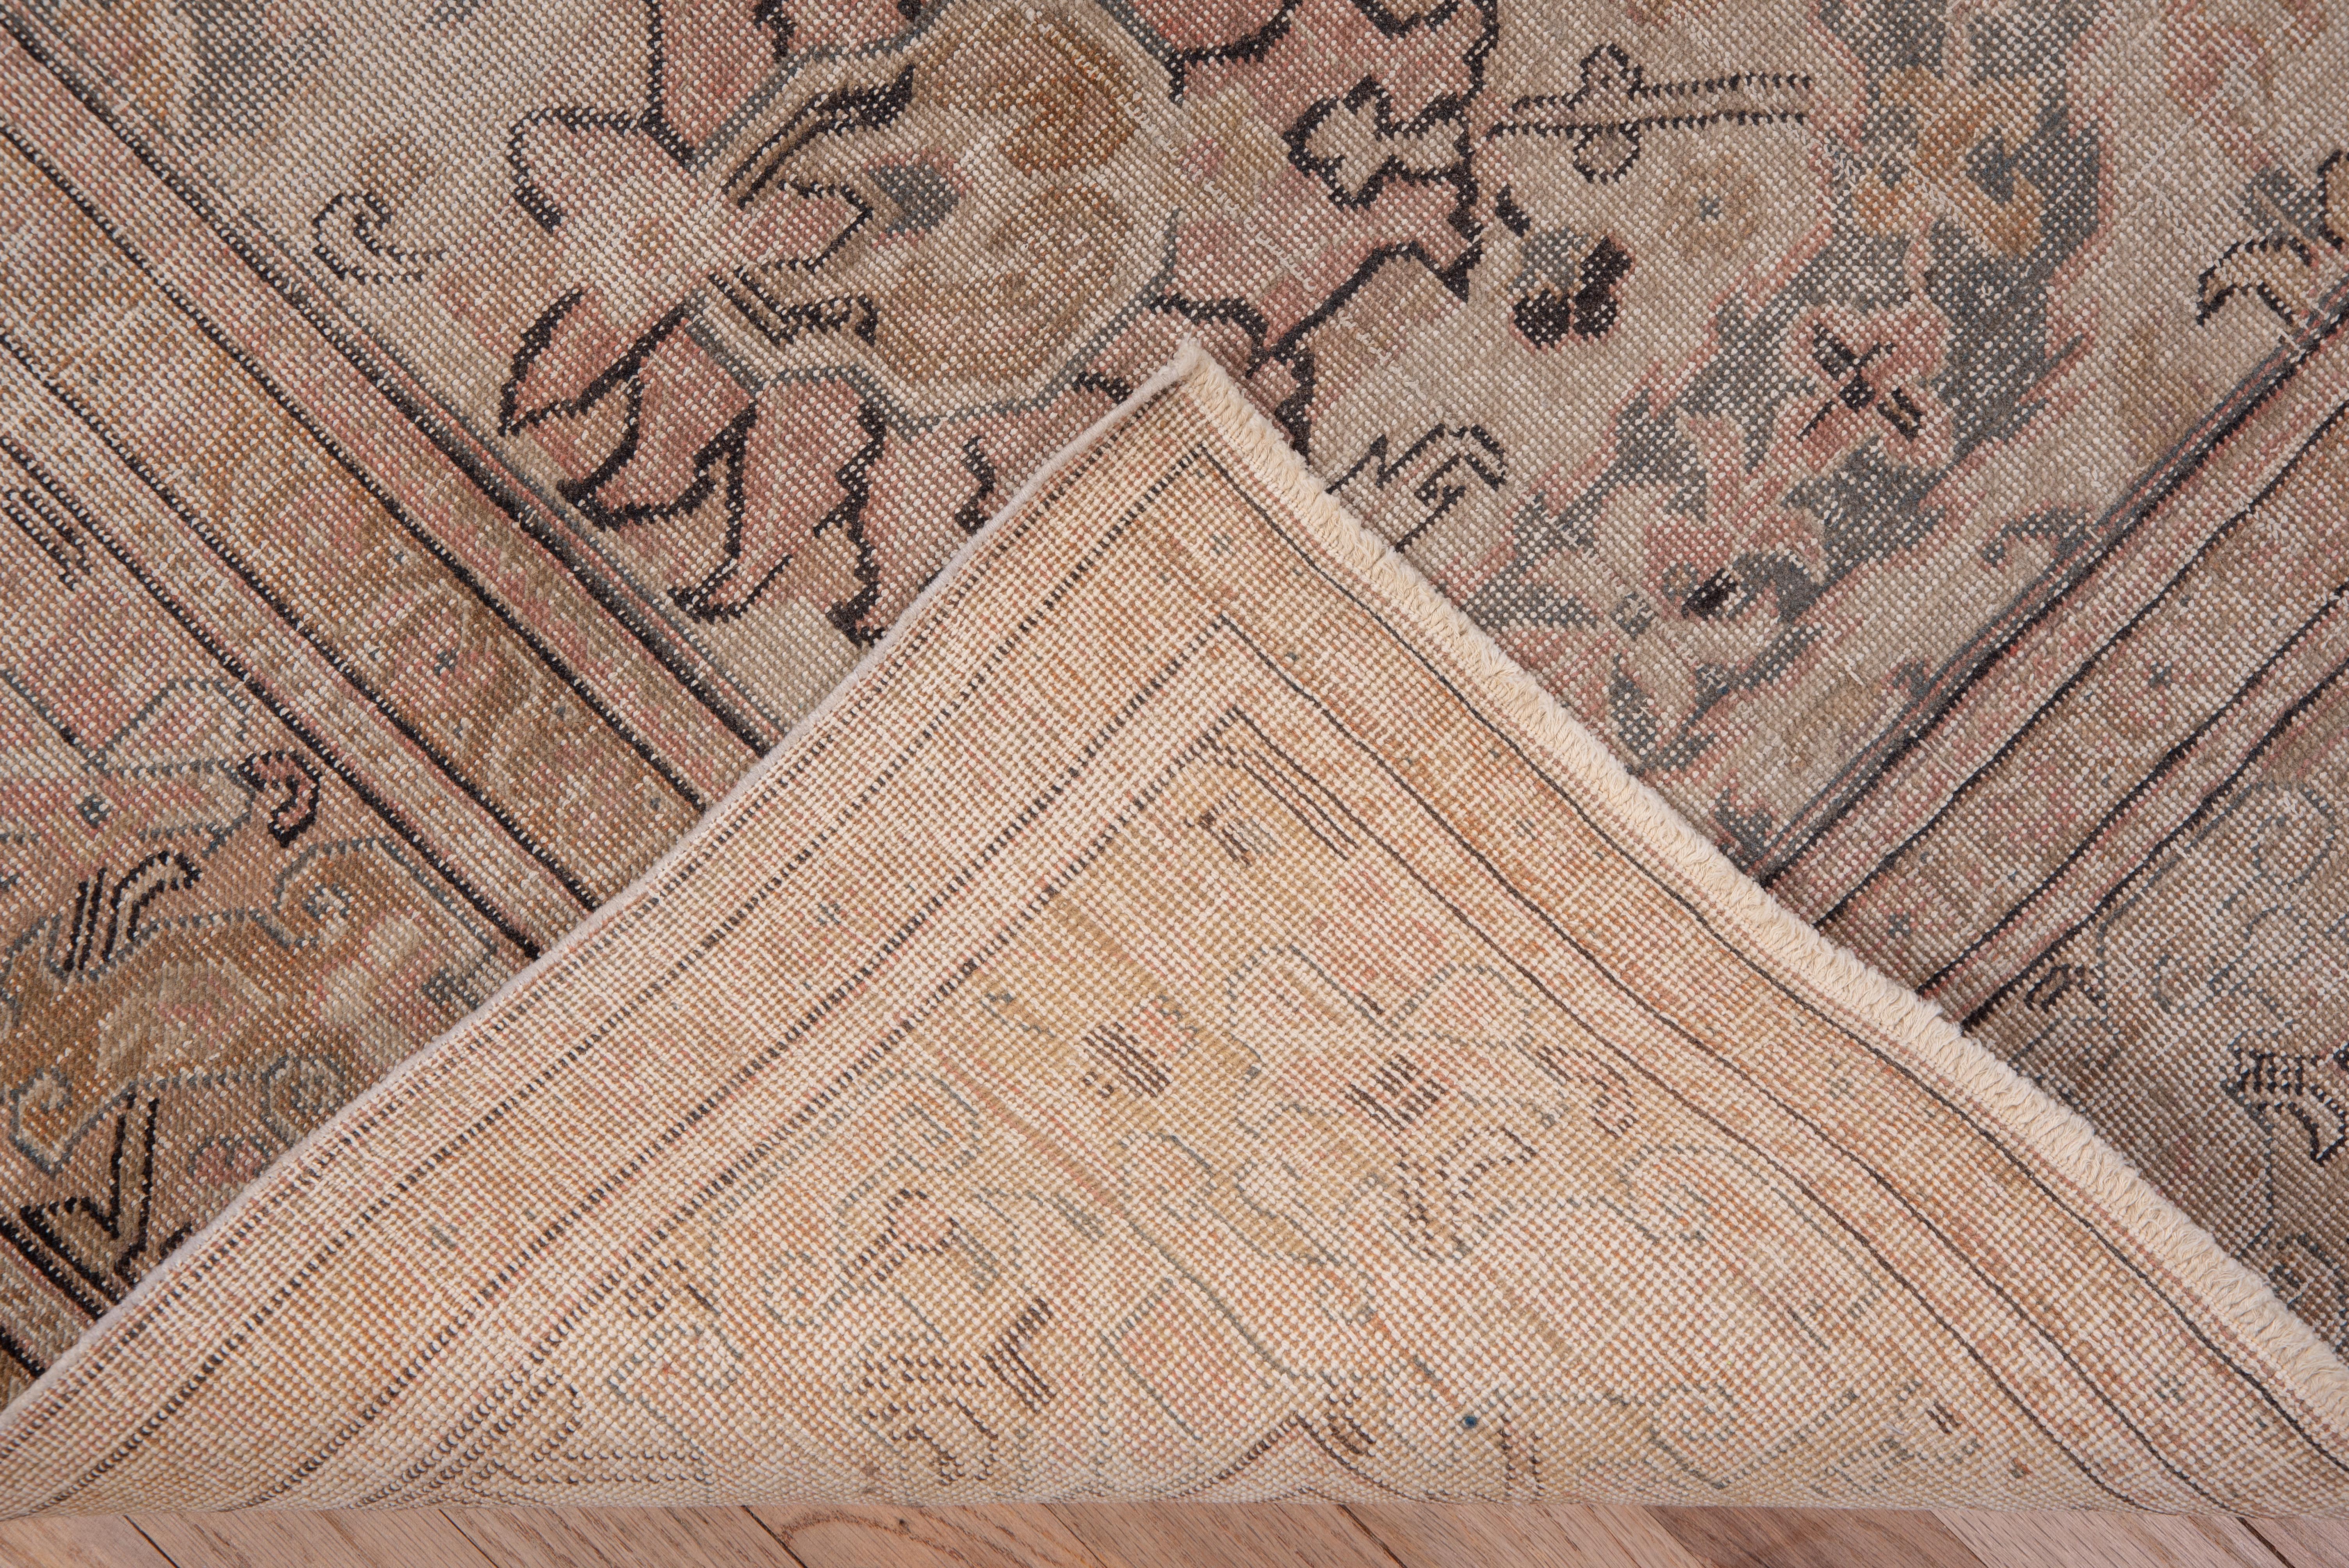 Tribal Antique Kaisary Carpet with Soft Tones